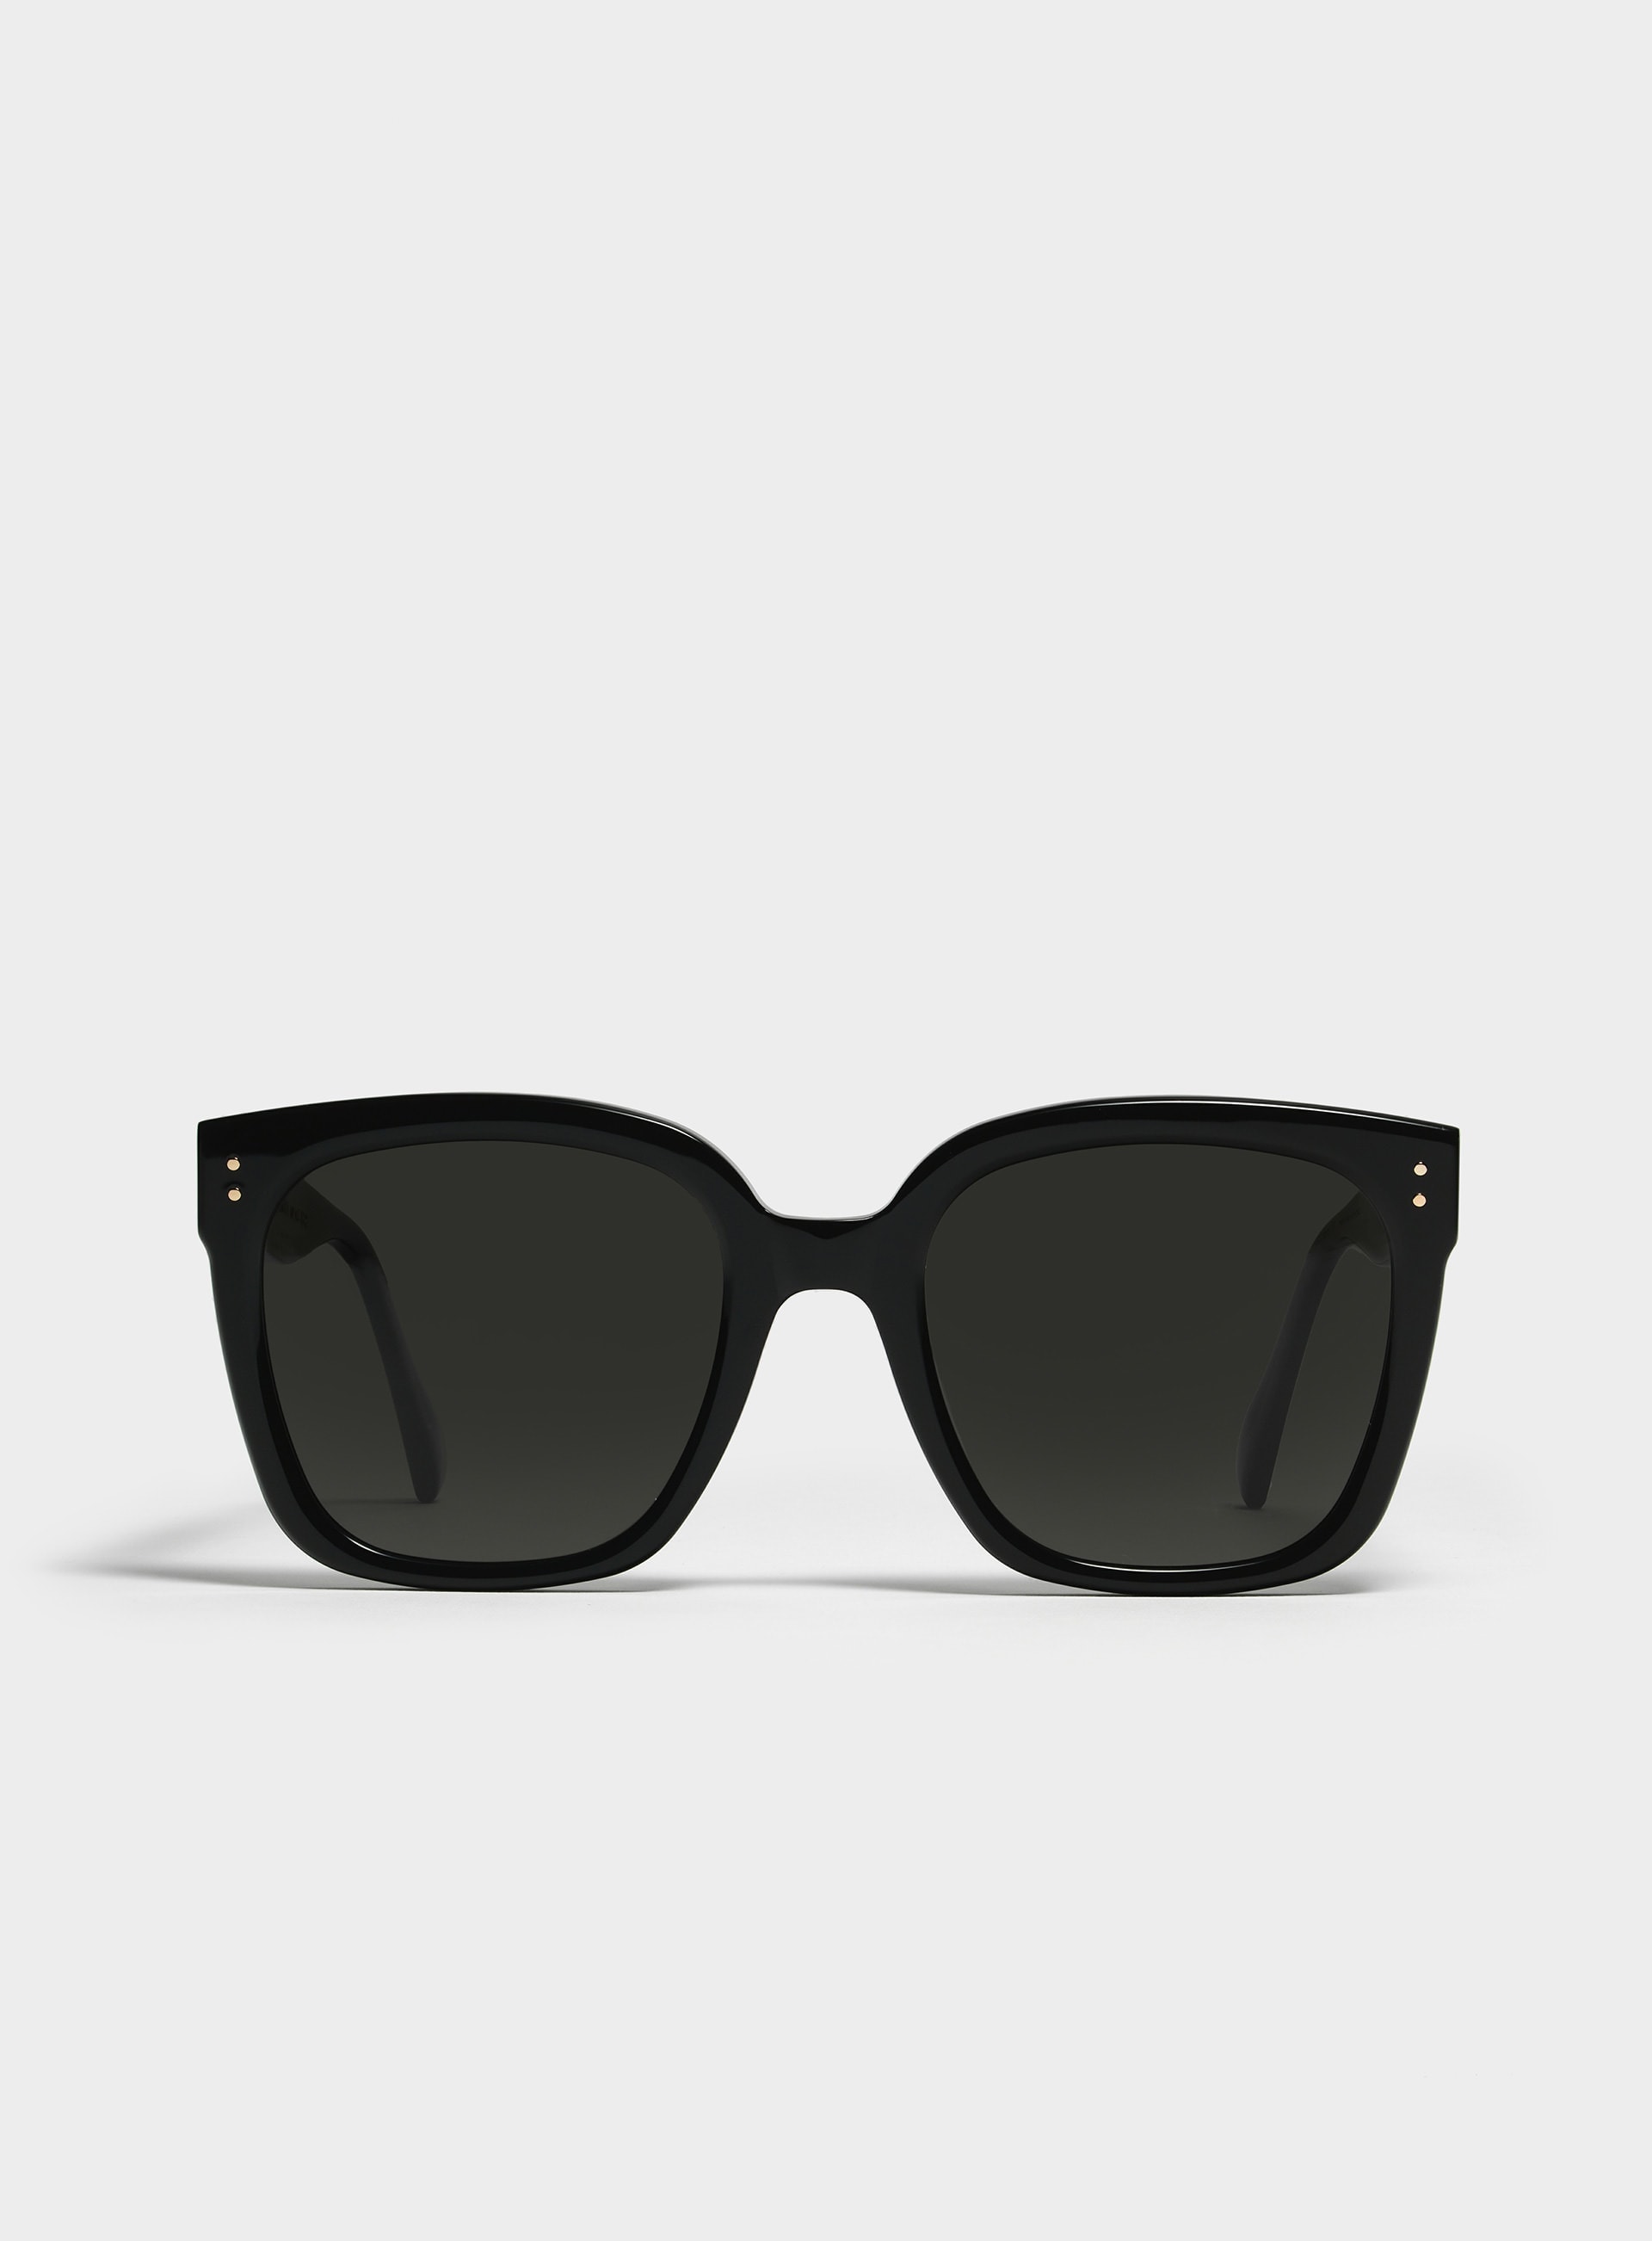 AutoDim Sunglasses – Cali Shade